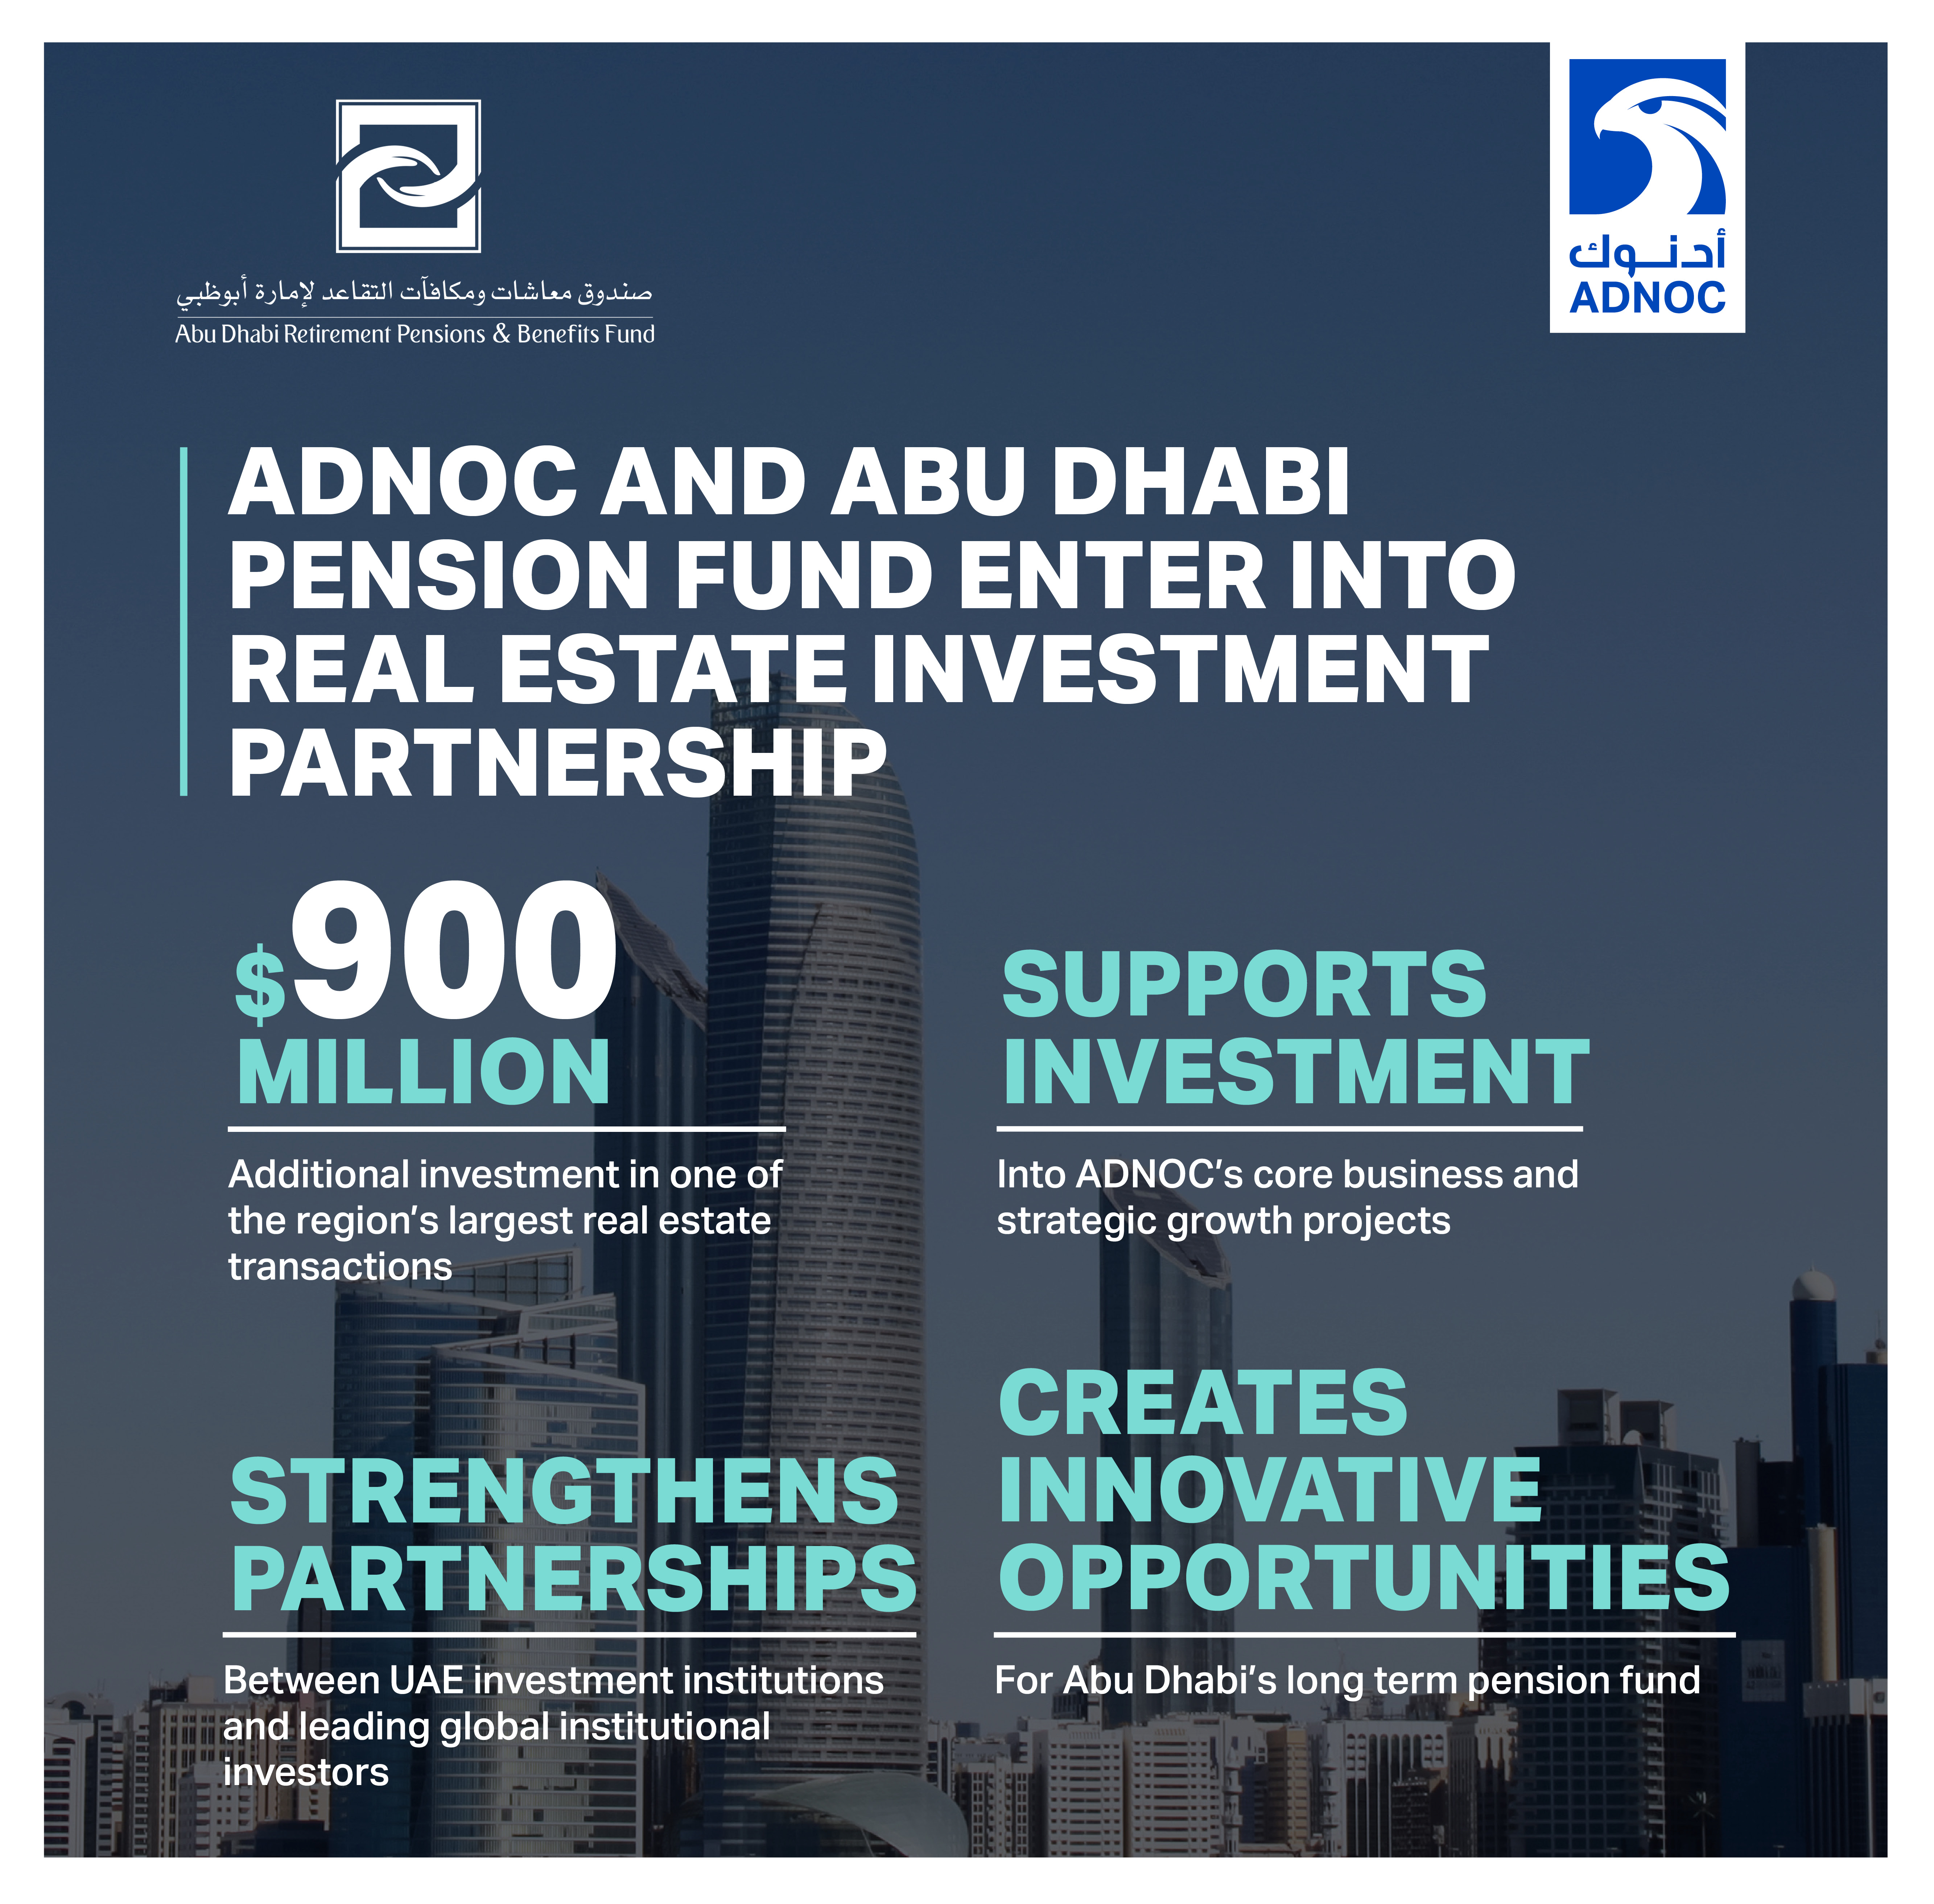 Abu Dhabi Pension Fund, ADNOC Sign Strategic Real Estate Investment Partnership